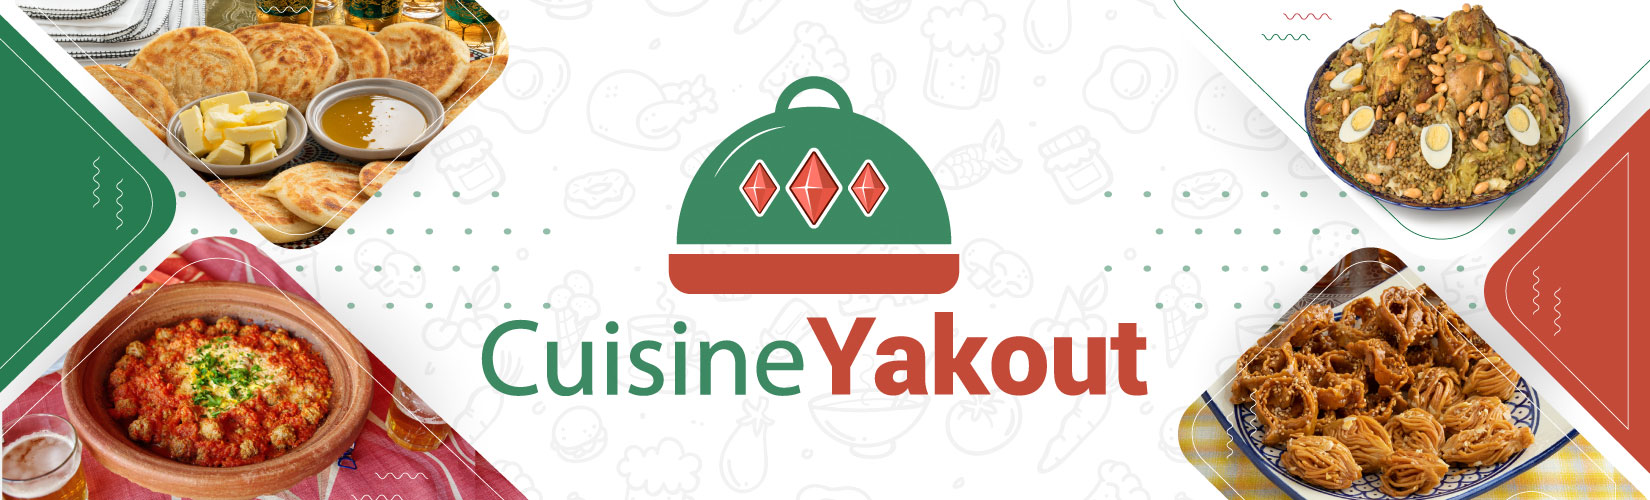 Cuisine Yakout